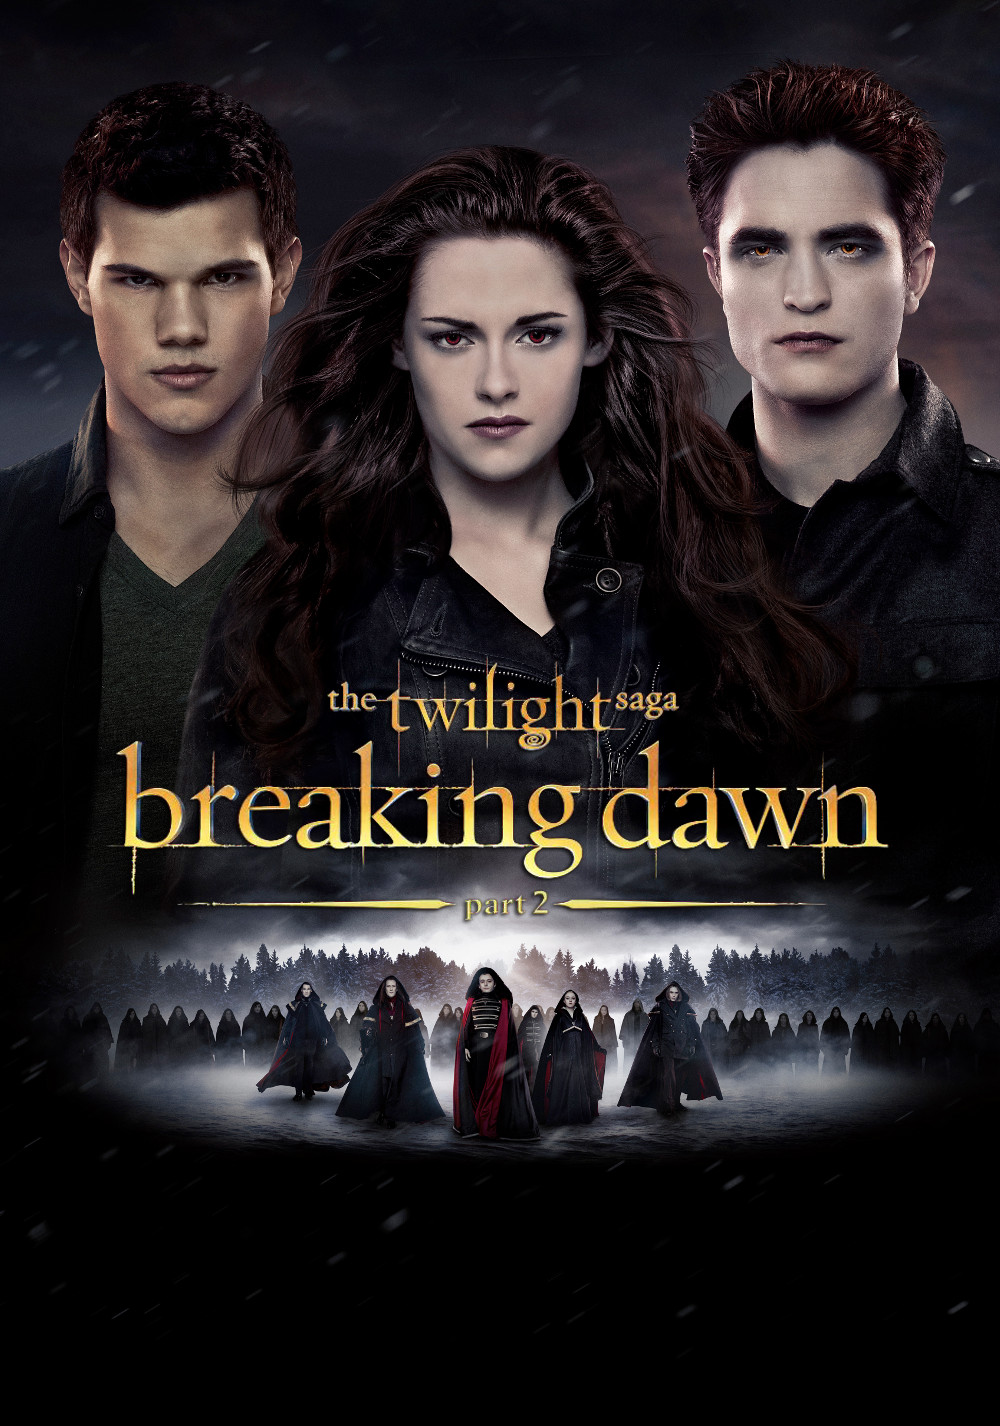 The Twilight Saga: Breaking Dawn - Part 2 Picture